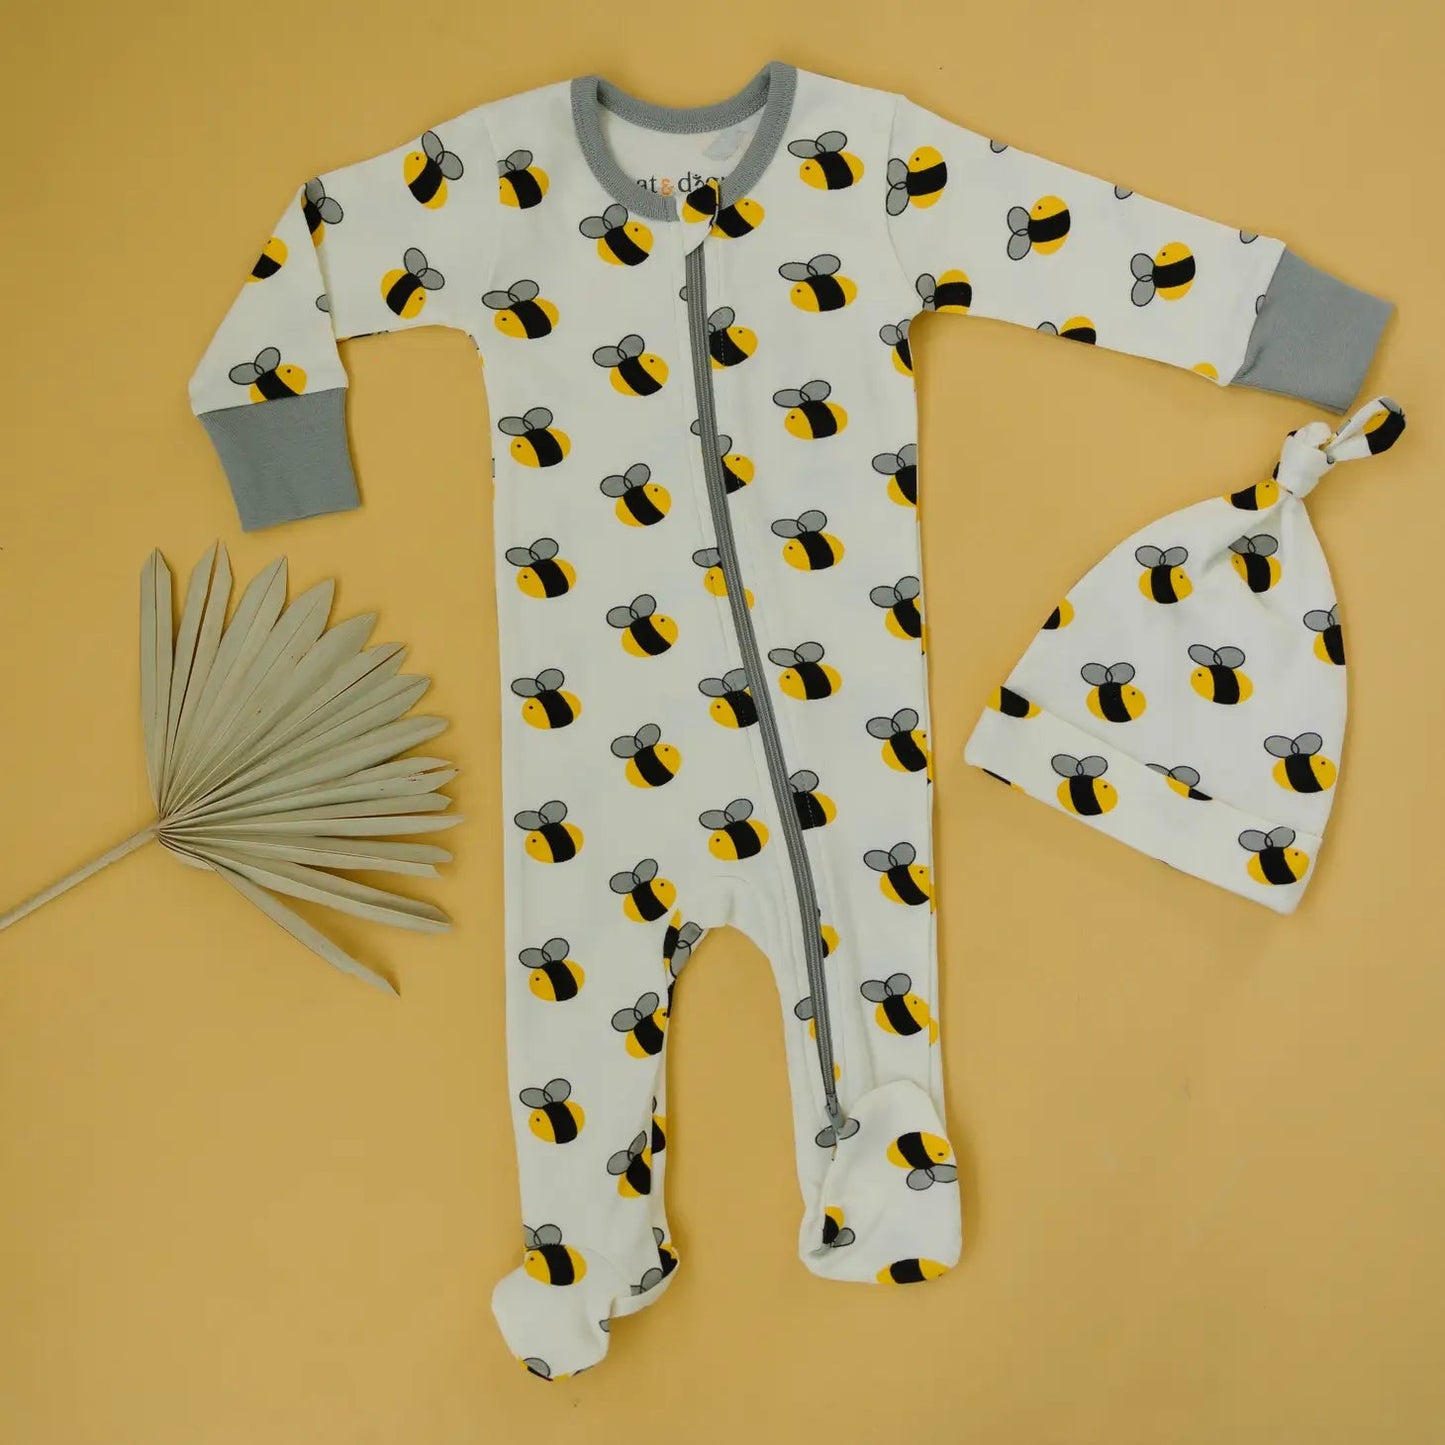 Bumble Bee Organic Baby Footie Pajamas - Wild Child Hat CoCat & DogmaPajamas